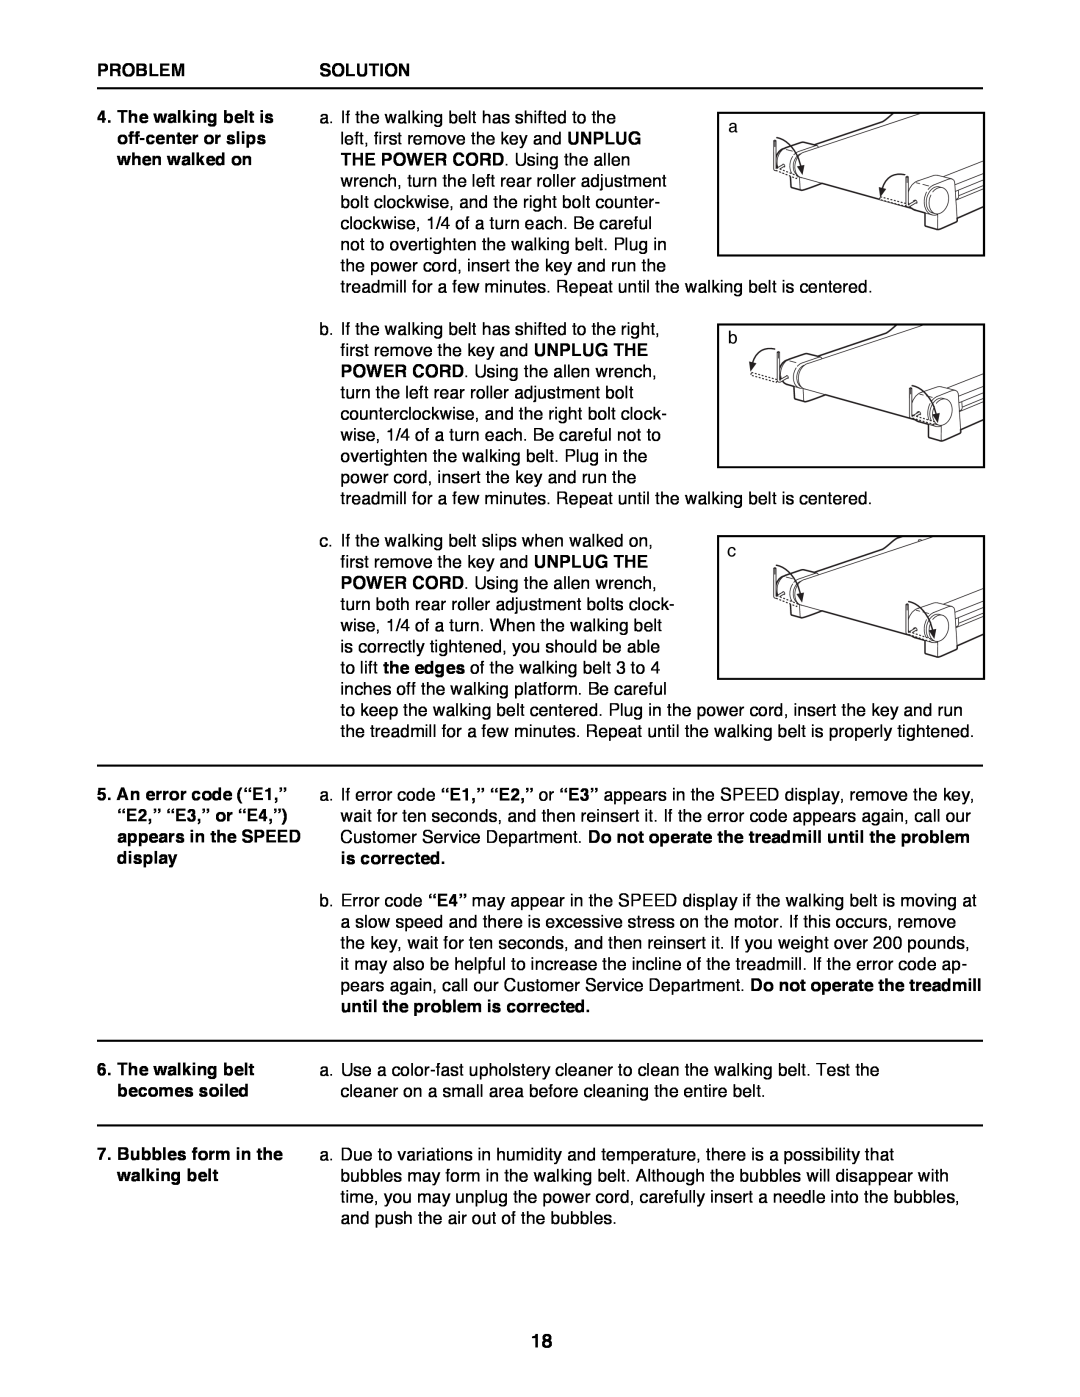 Healthrider HRTL14980 manual Problemsolution, The walking belt is off-center or slips when walked on, becomes soiled 